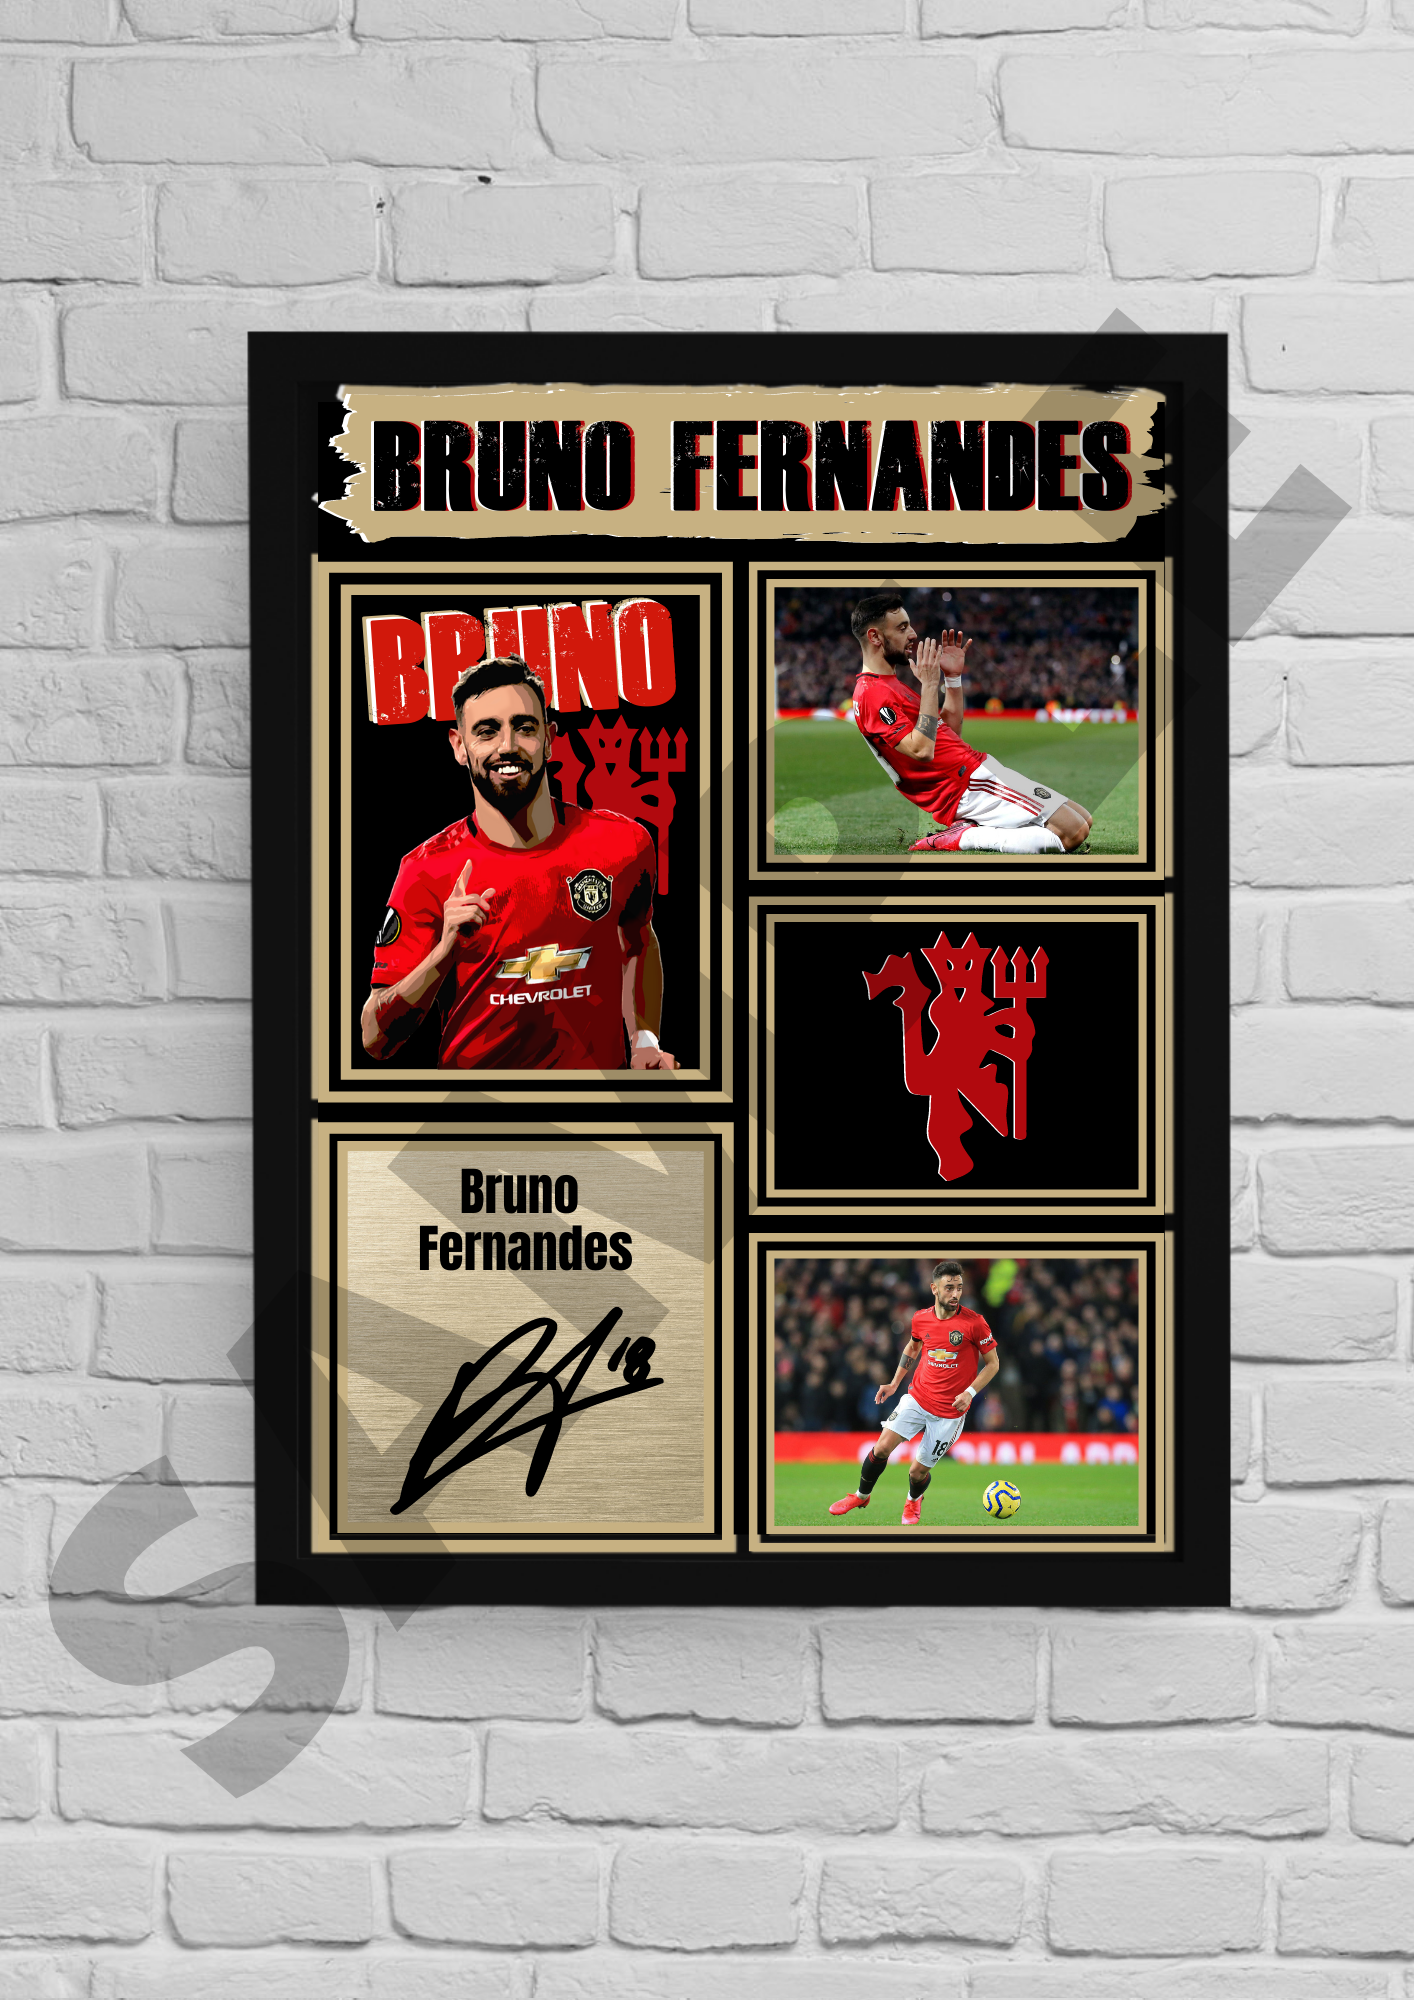 Bruno Fernandes (Man Utd) Football Memorabilia/Collectable #39 - Signed print